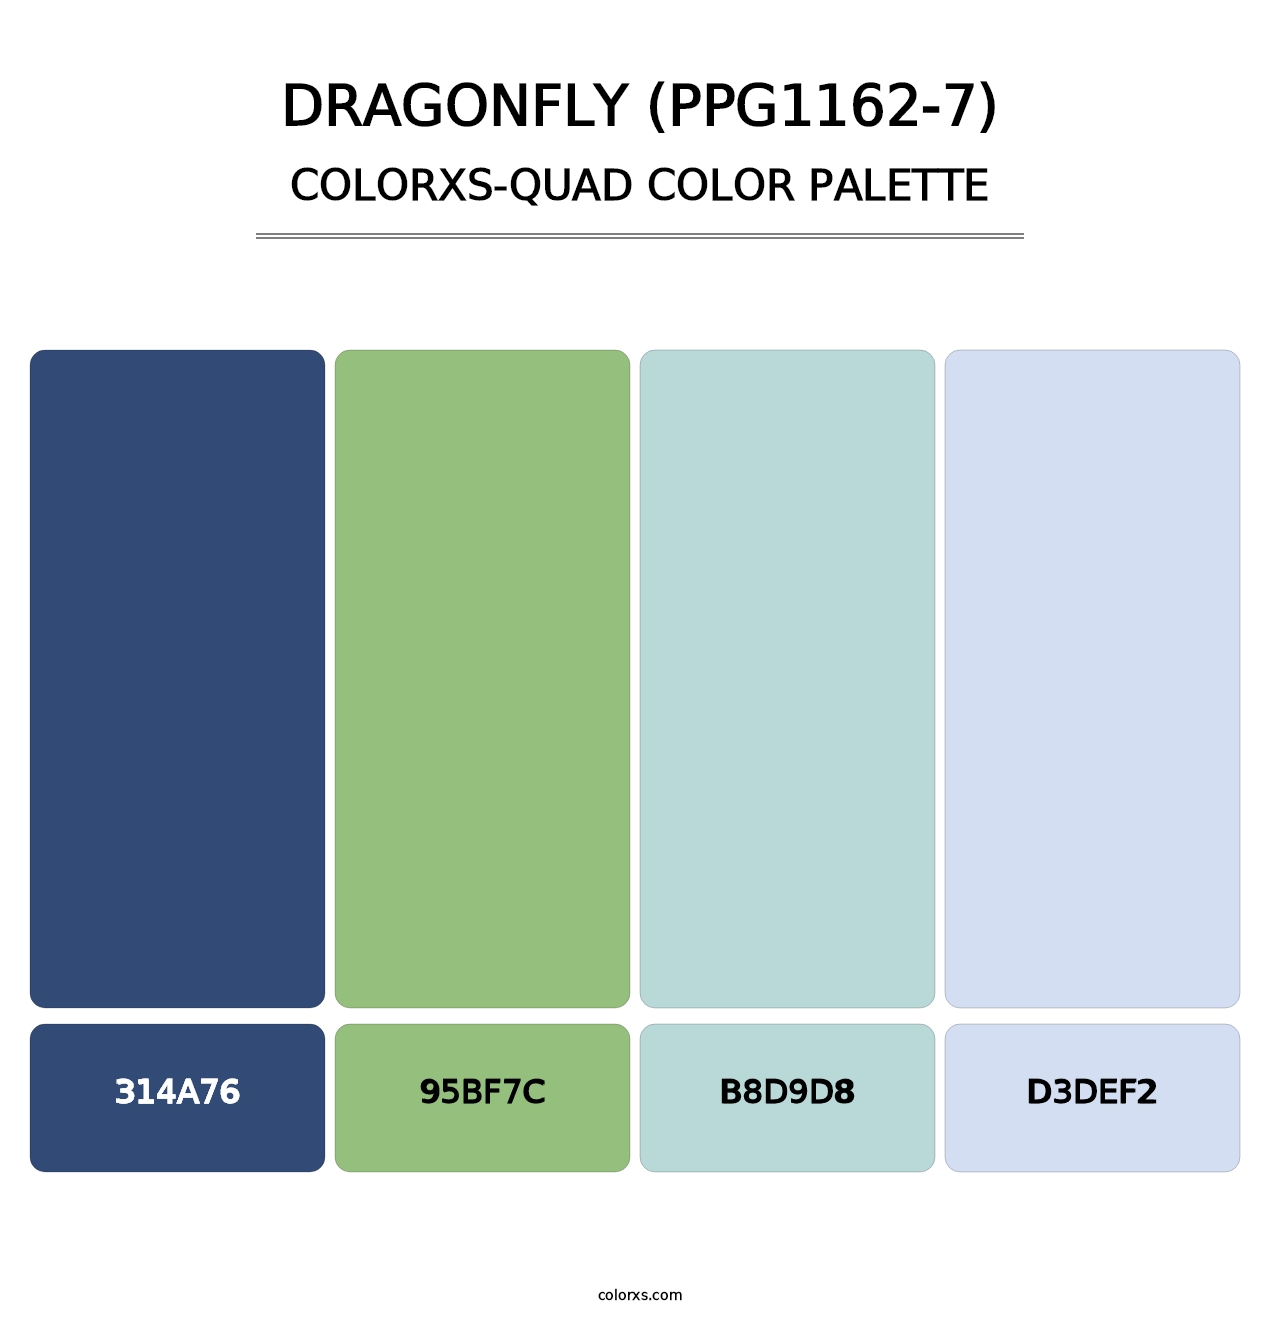 Dragonfly (PPG1162-7) - Colorxs Quad Palette